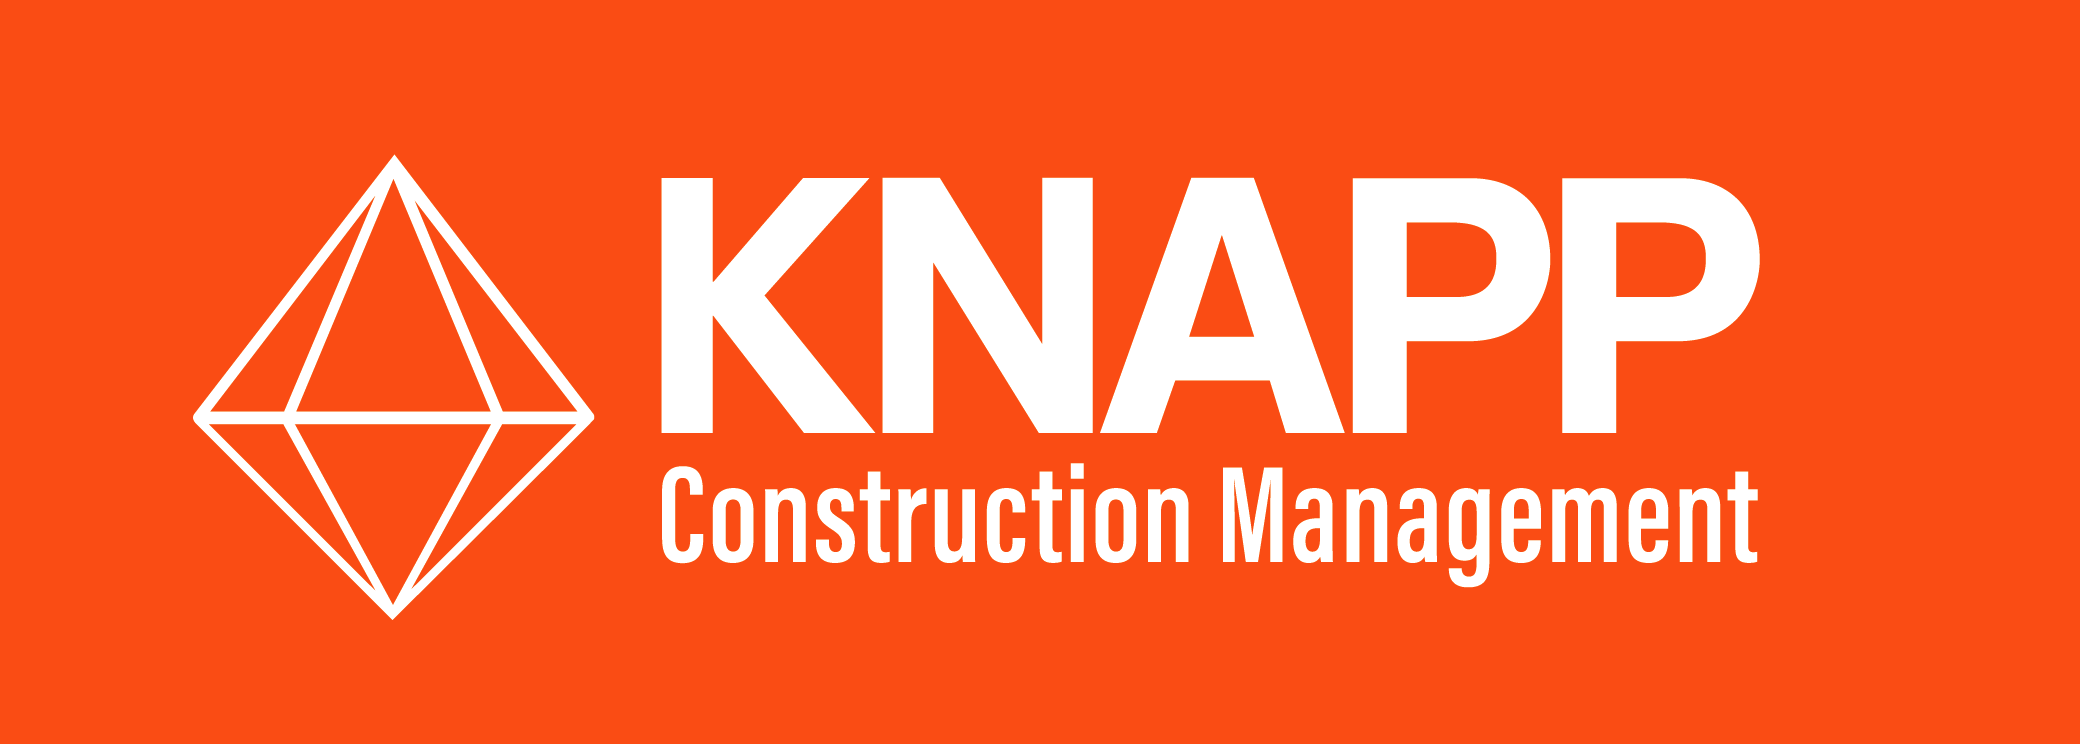 Knapp Construction Management Logo